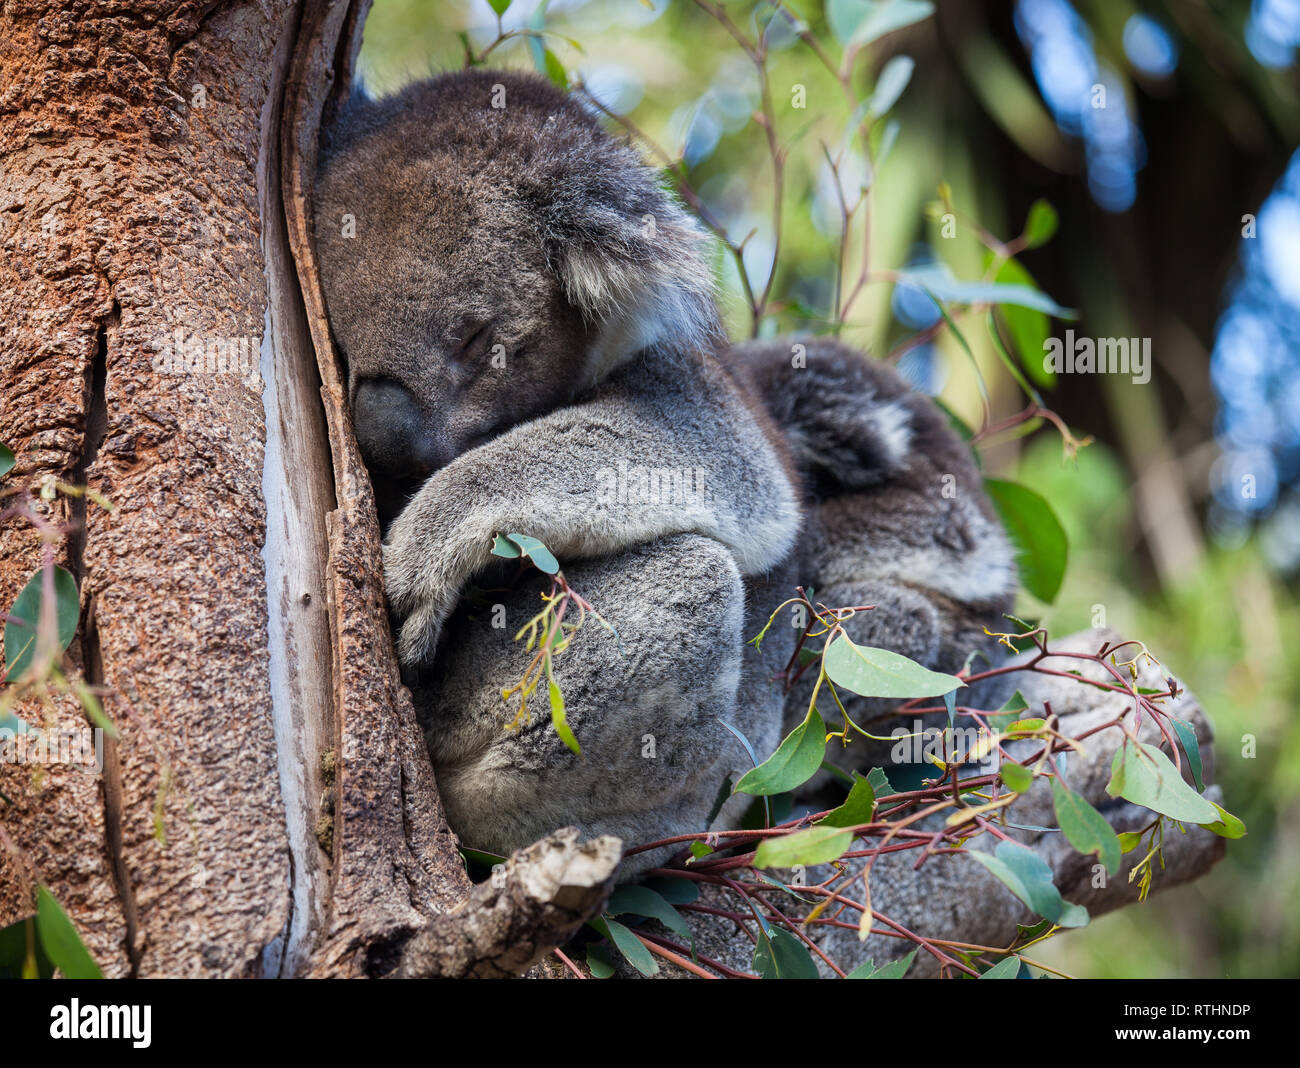 Linda Pareja Abrazada De Australian Koala Bears La Madre Y Su Bebe Durmiendo En Un Arbol De Eucalipto Fotografia De Stock Alamy